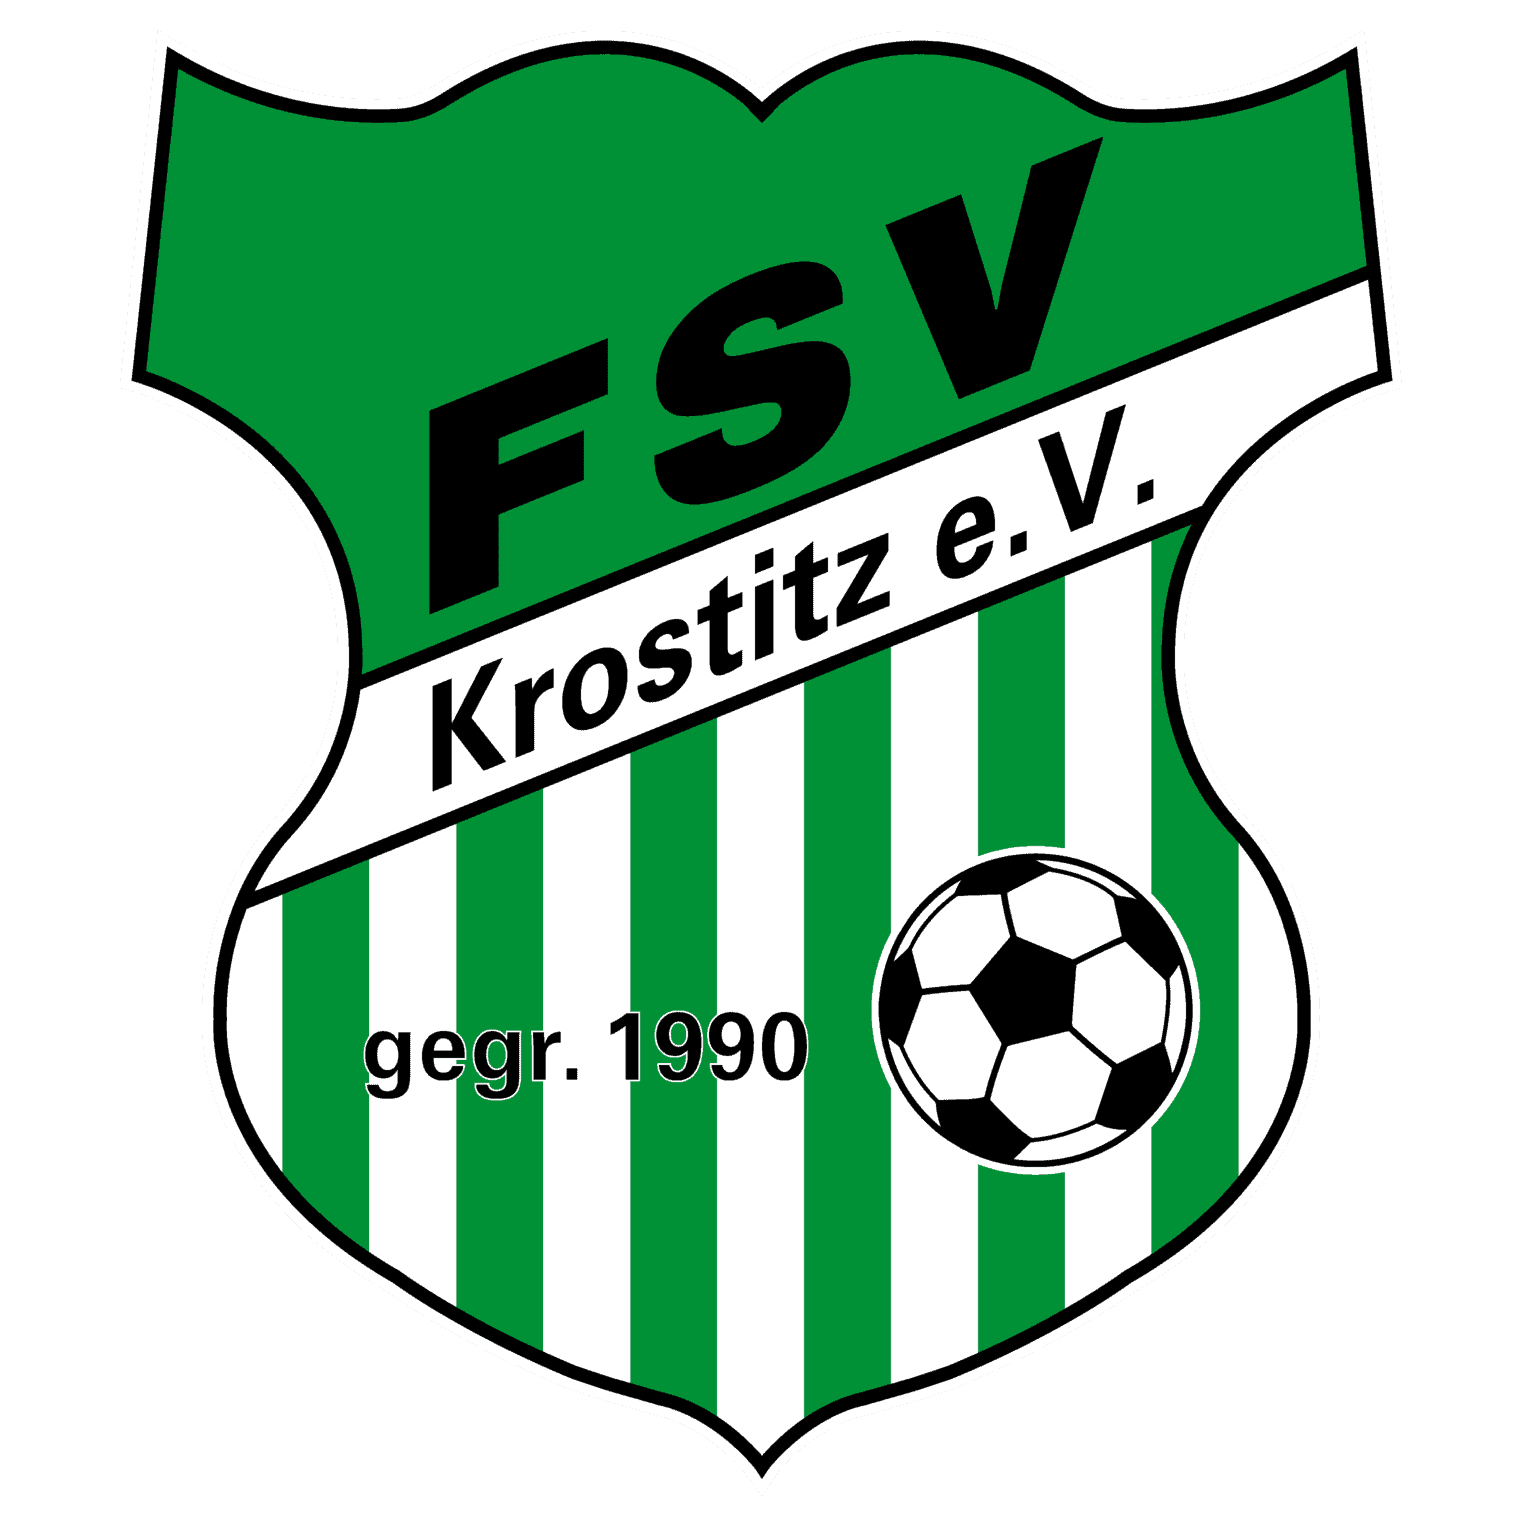 https://fsvkrostitz.com/wp-content/uploads/2021/08/FSV-Krostitz-Wappen-1-1536x1536.png